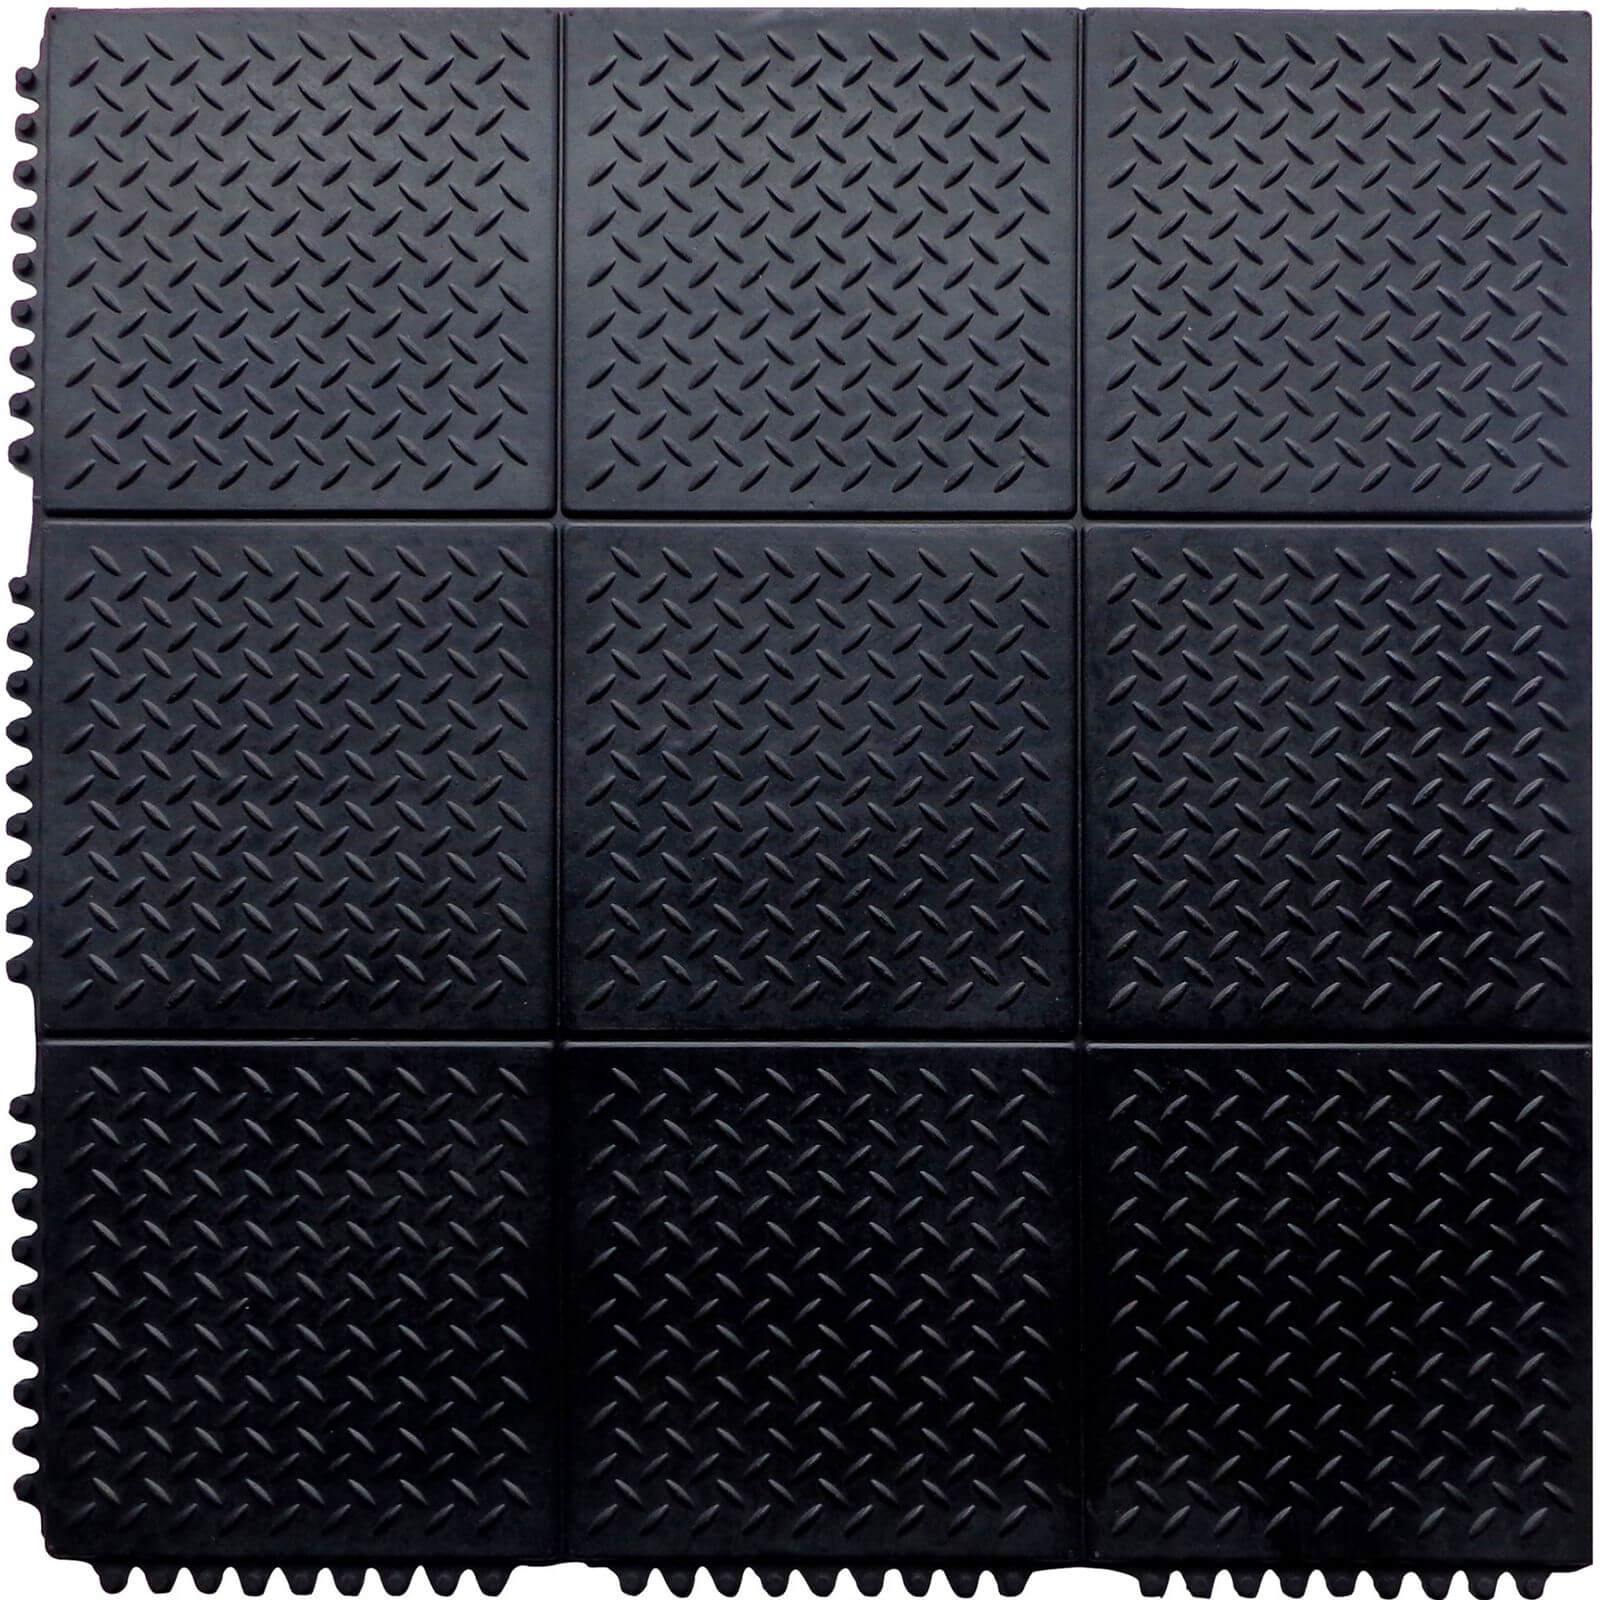 Interlocking Rubber Checker Plate Floor Mat Black - 90 x 90cm